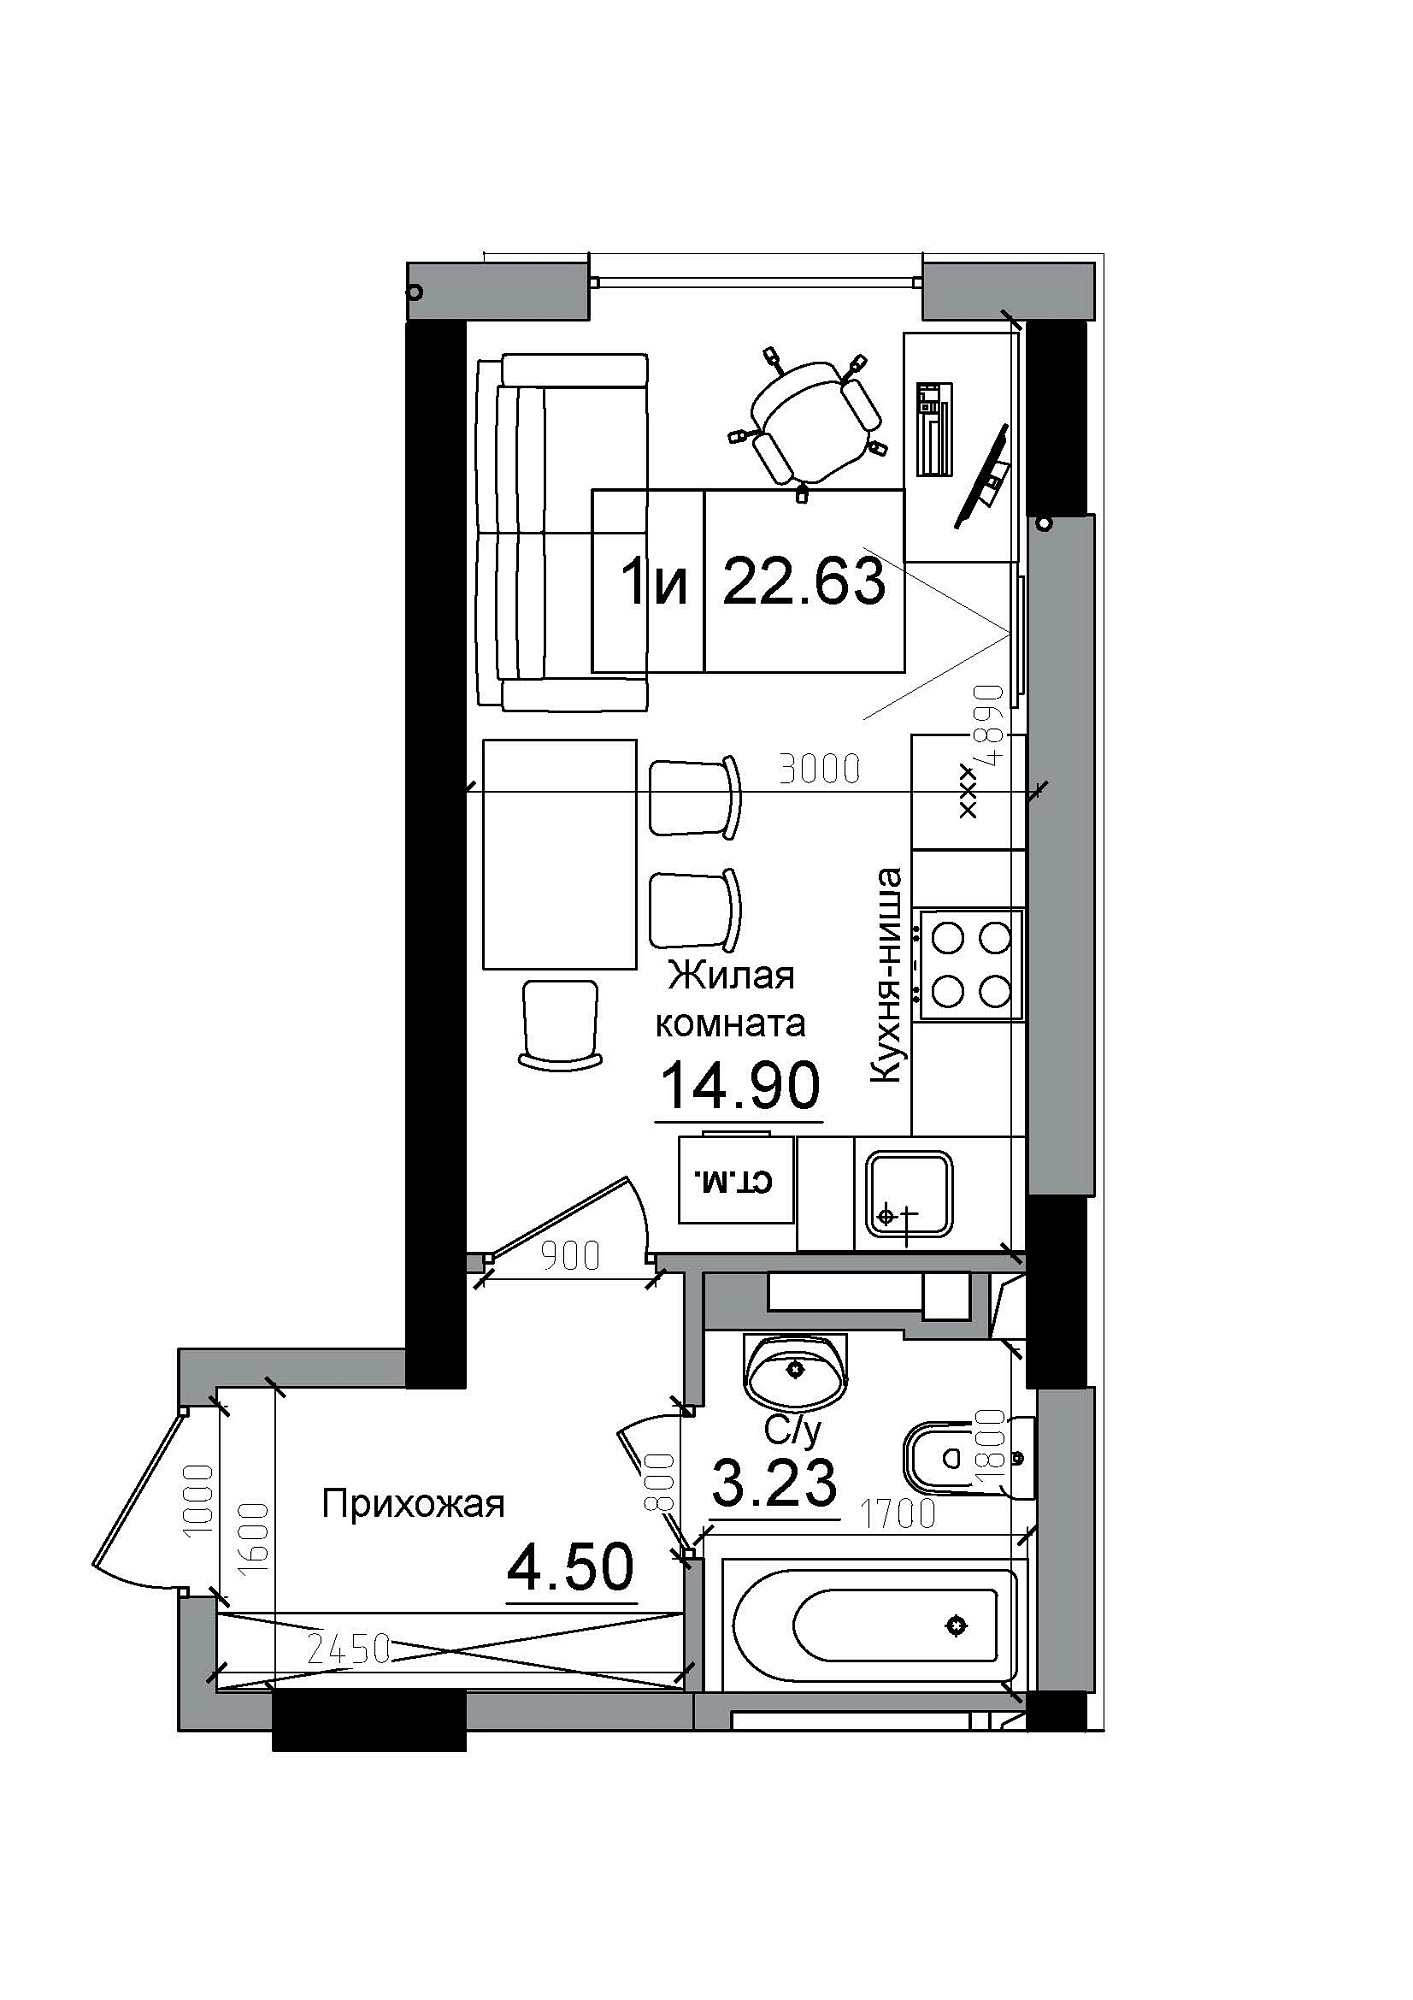 Планировка Smart-квартира площей 22.63м2, AB-12-02/00011.